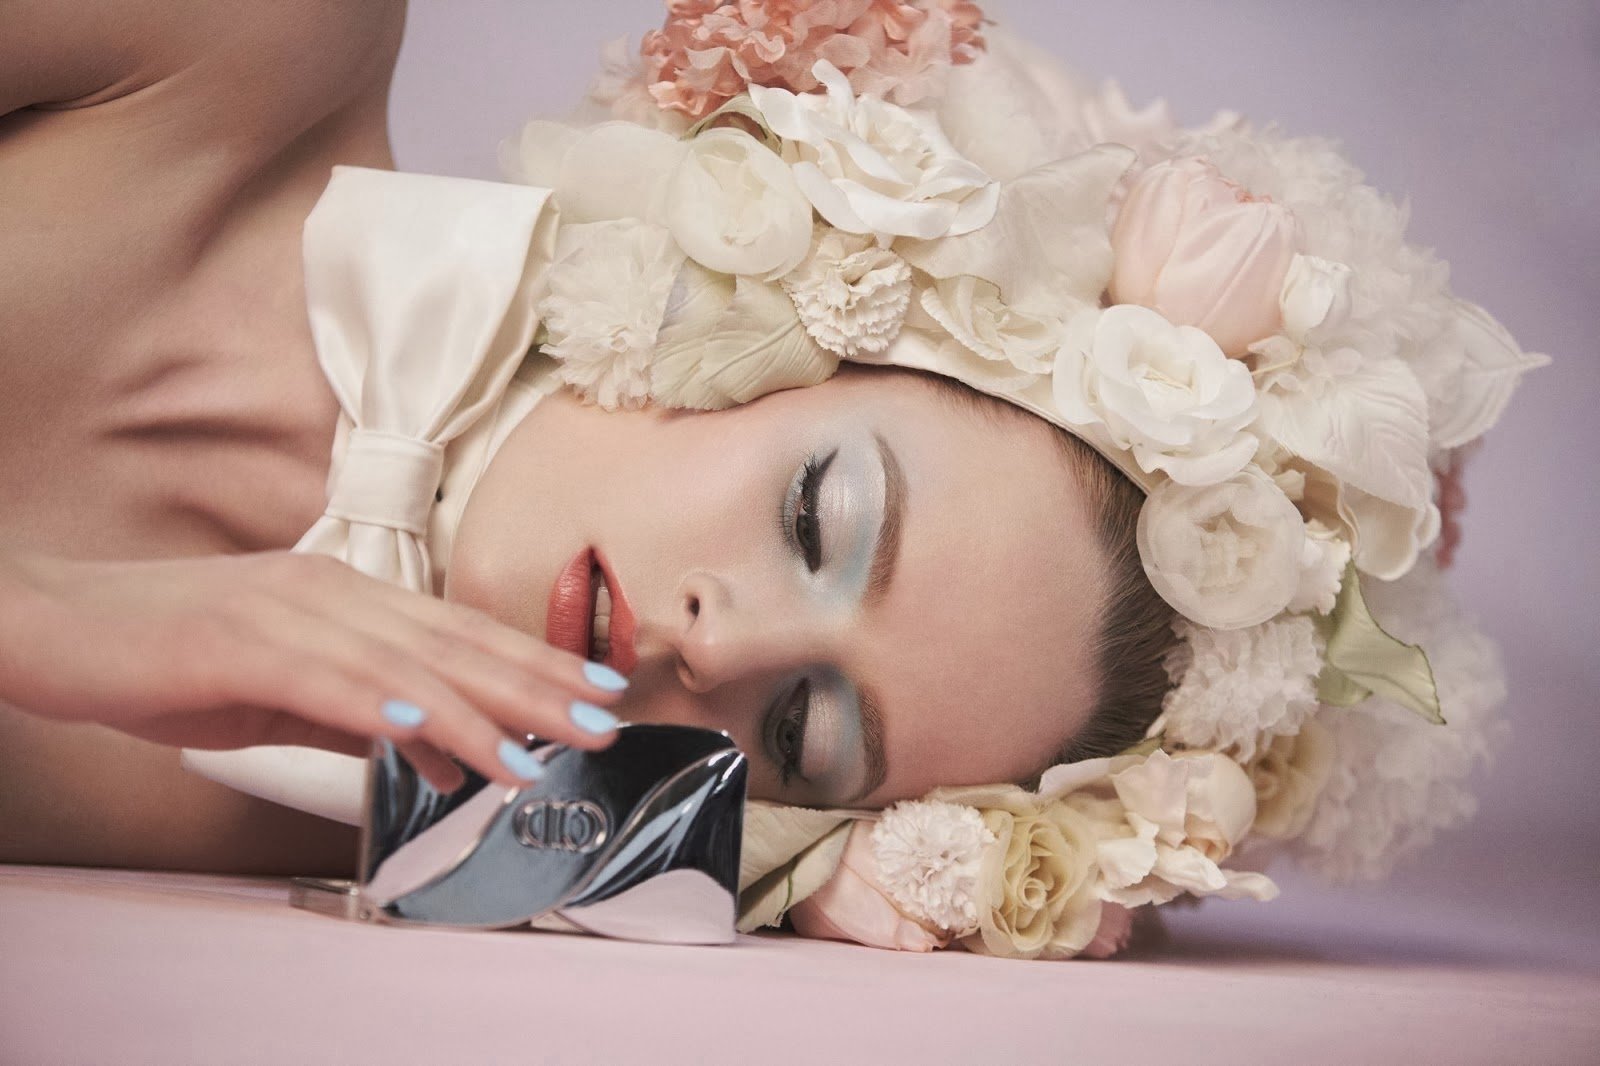 Daria+Strokous+for+Dior+Beauty+2014-002.jpg